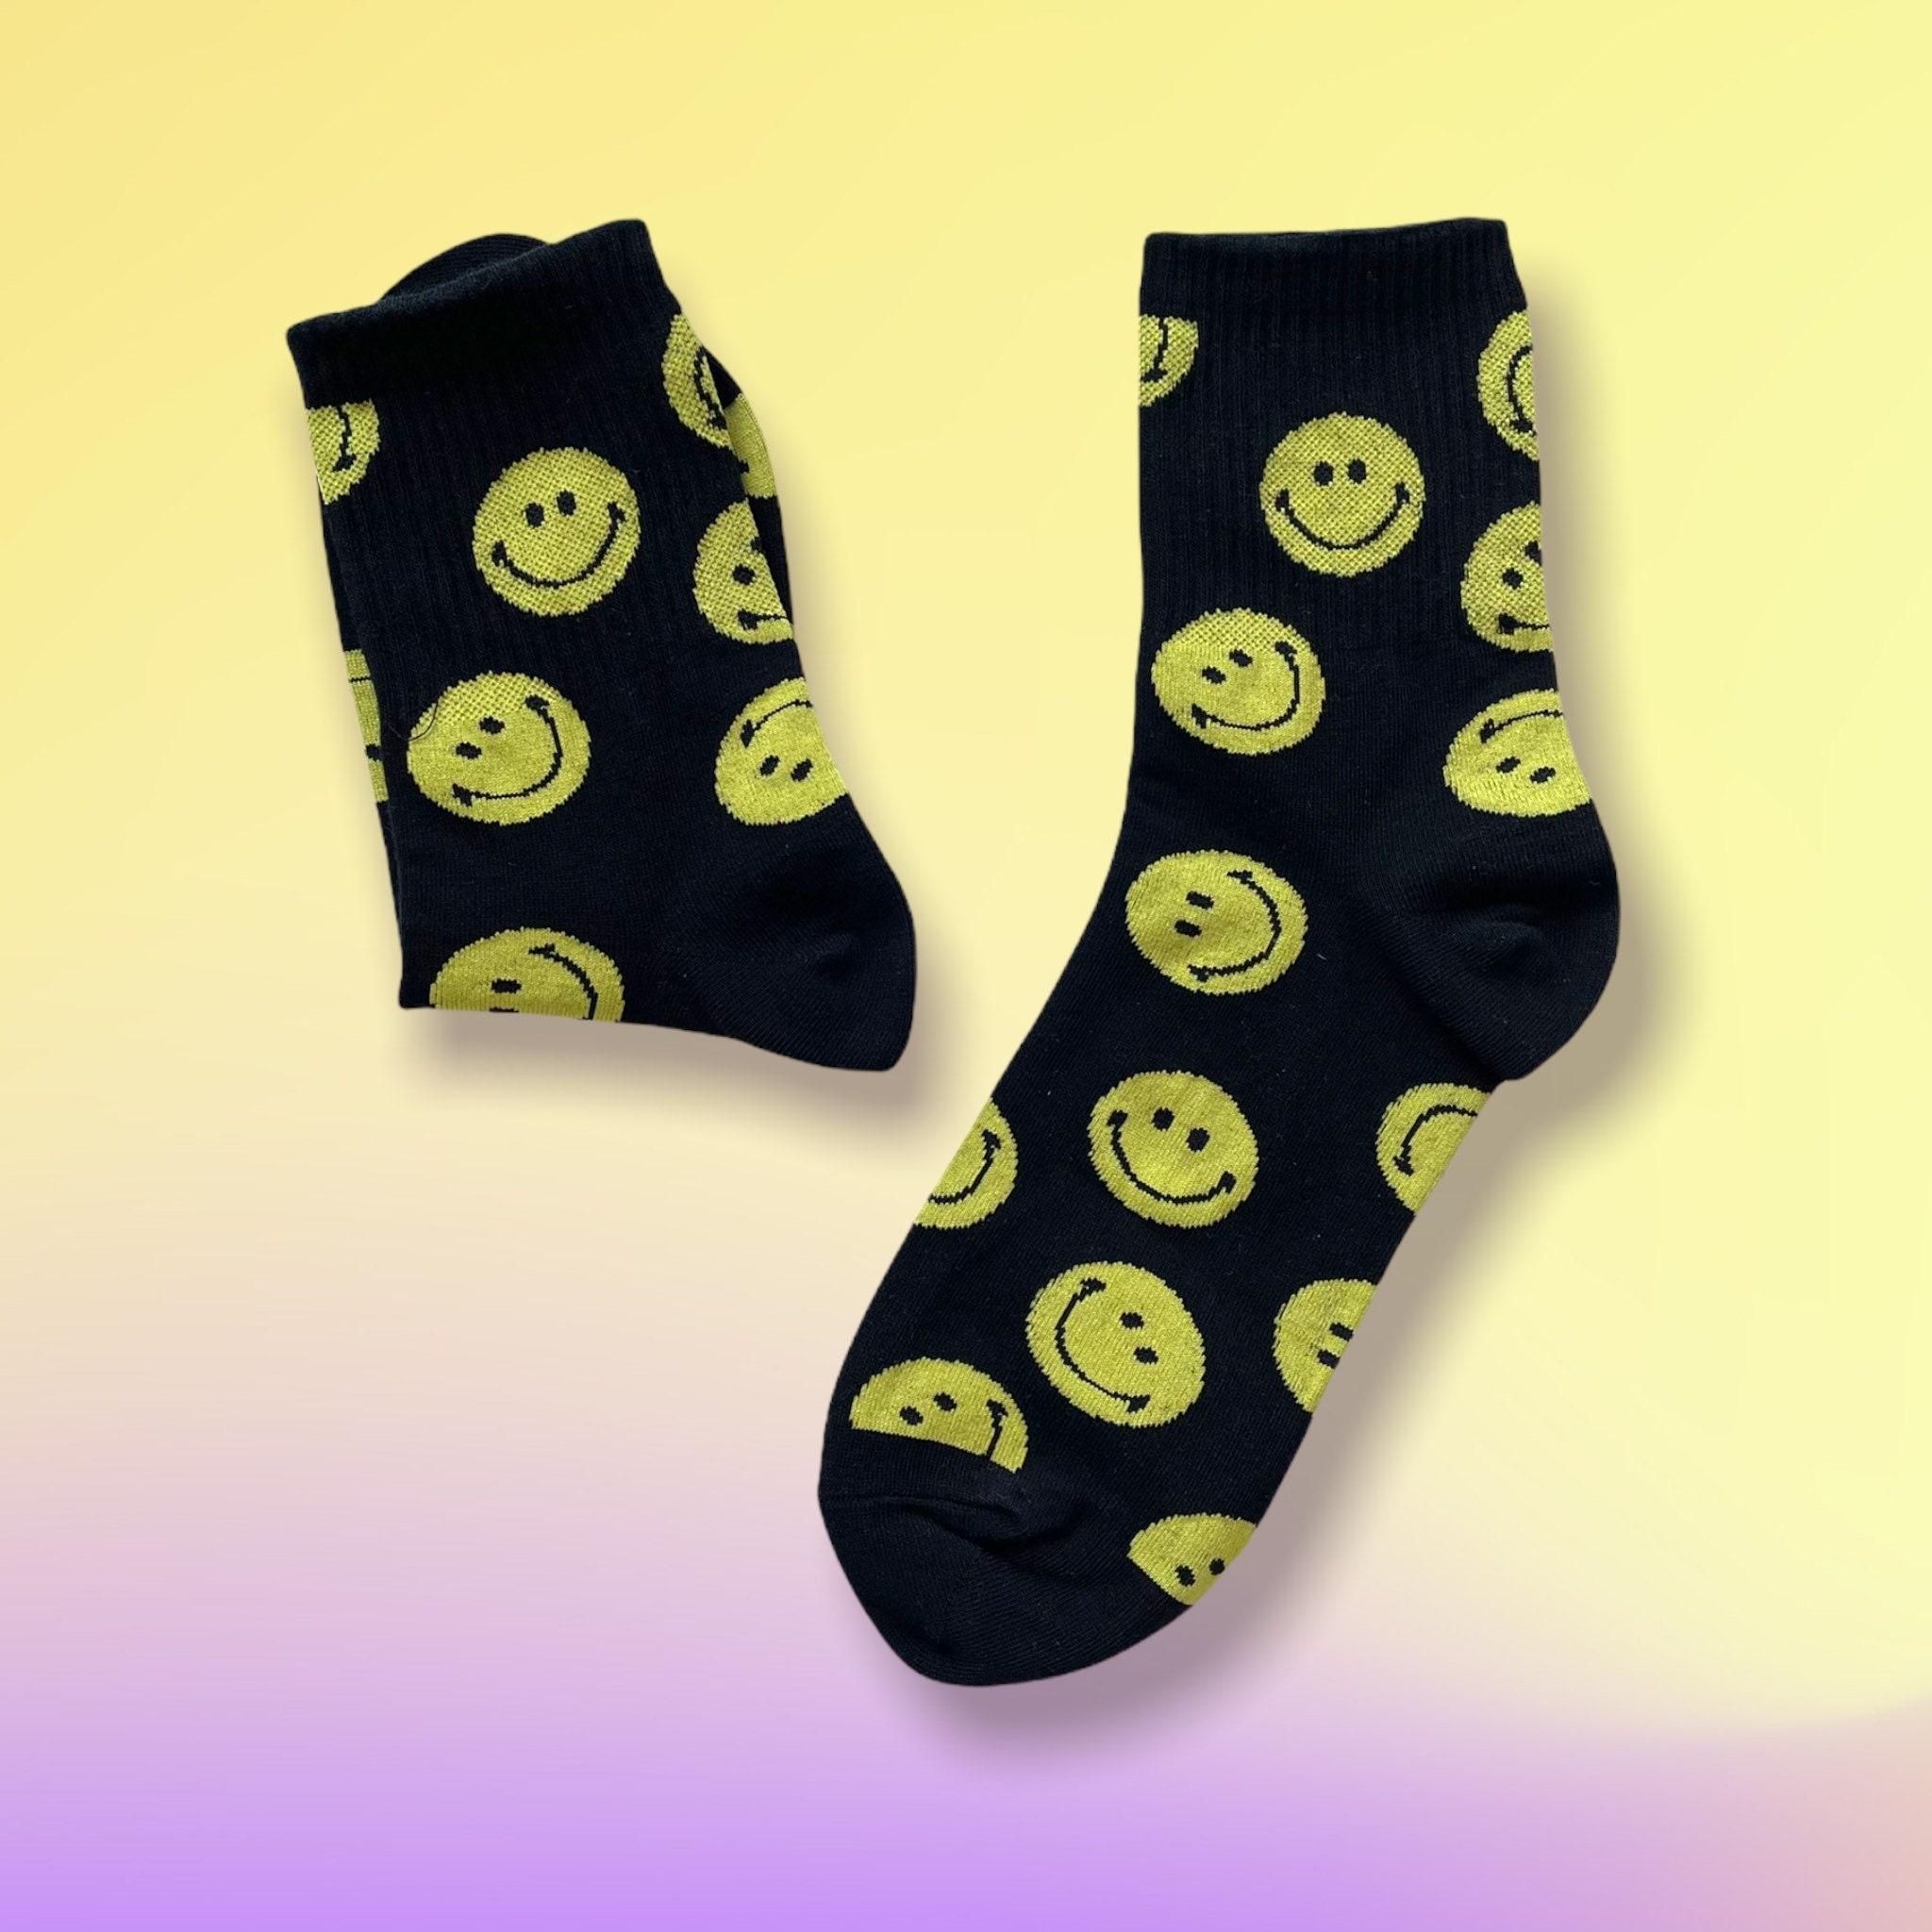 BESTSELLER Smiley Face Neon Crew Socks Women Fun Fashion - Etsy